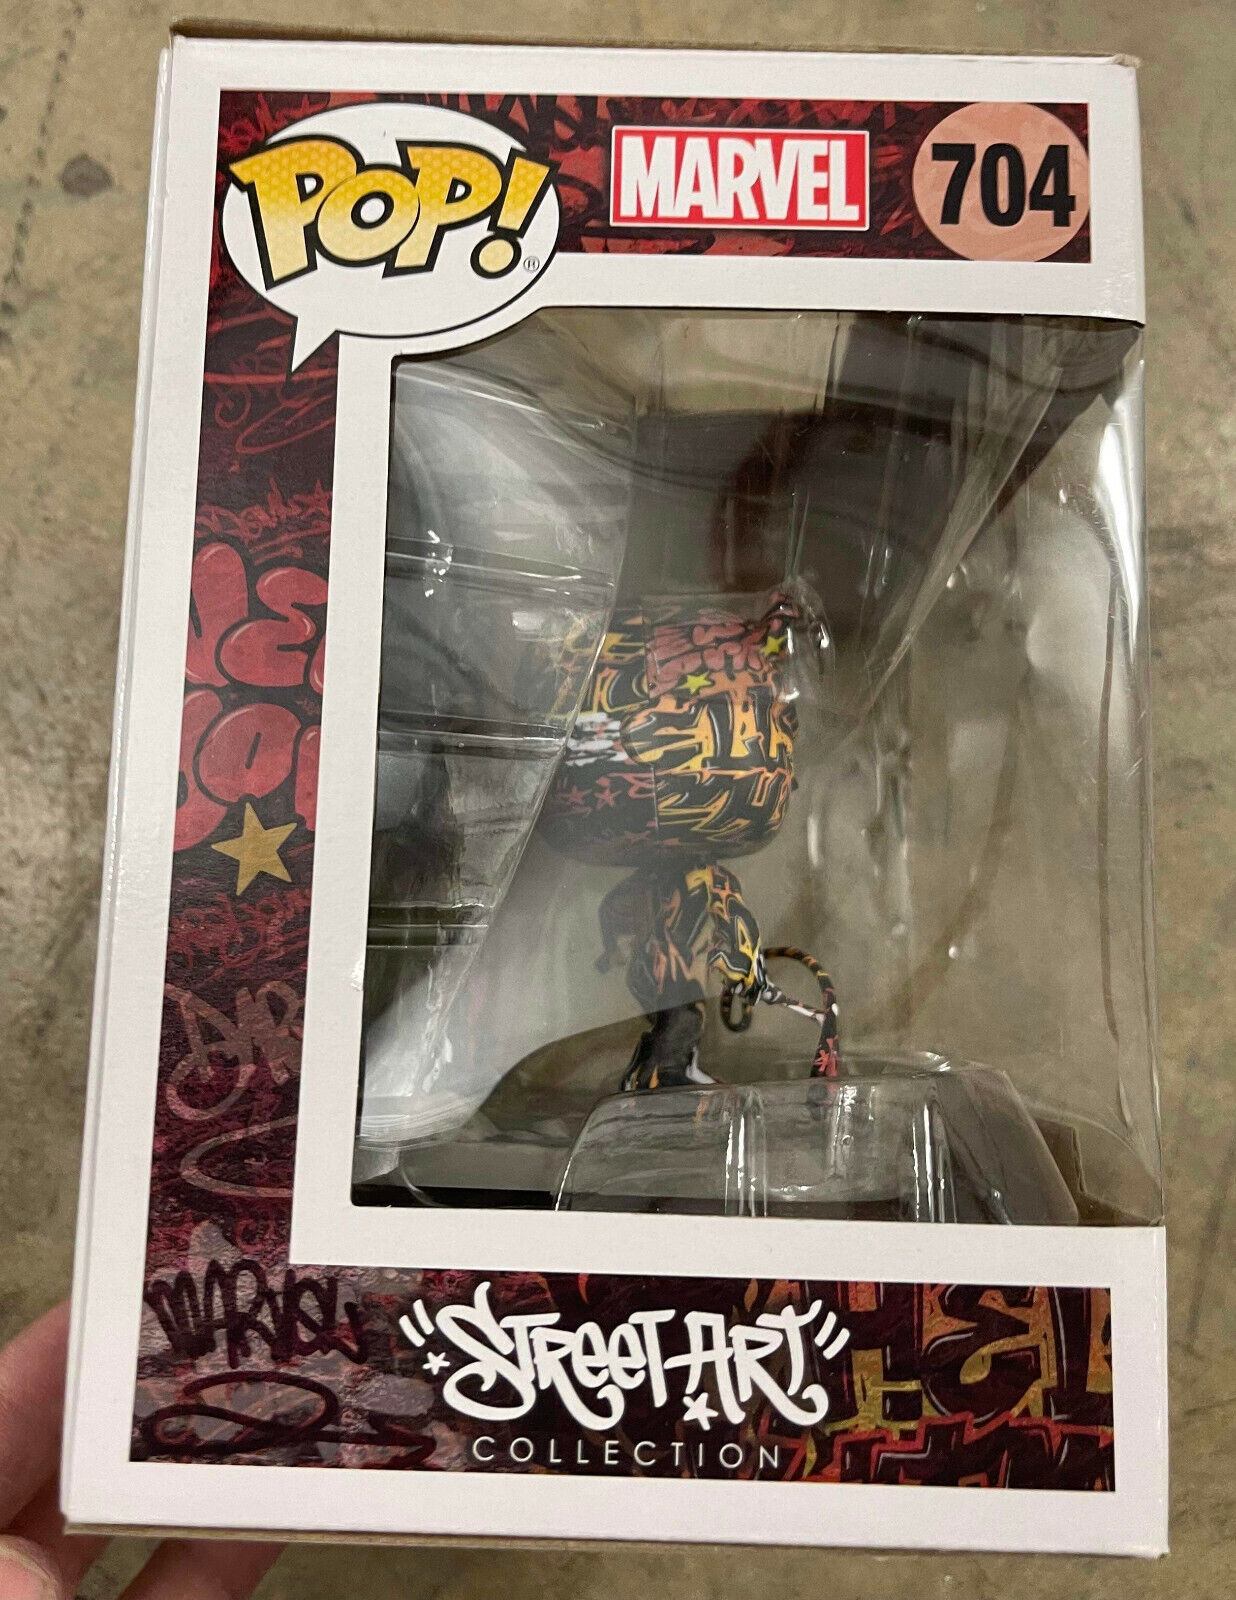 Funko Pop! Marvel Daredevil #704 Street Art Collection GameStop Exclusive